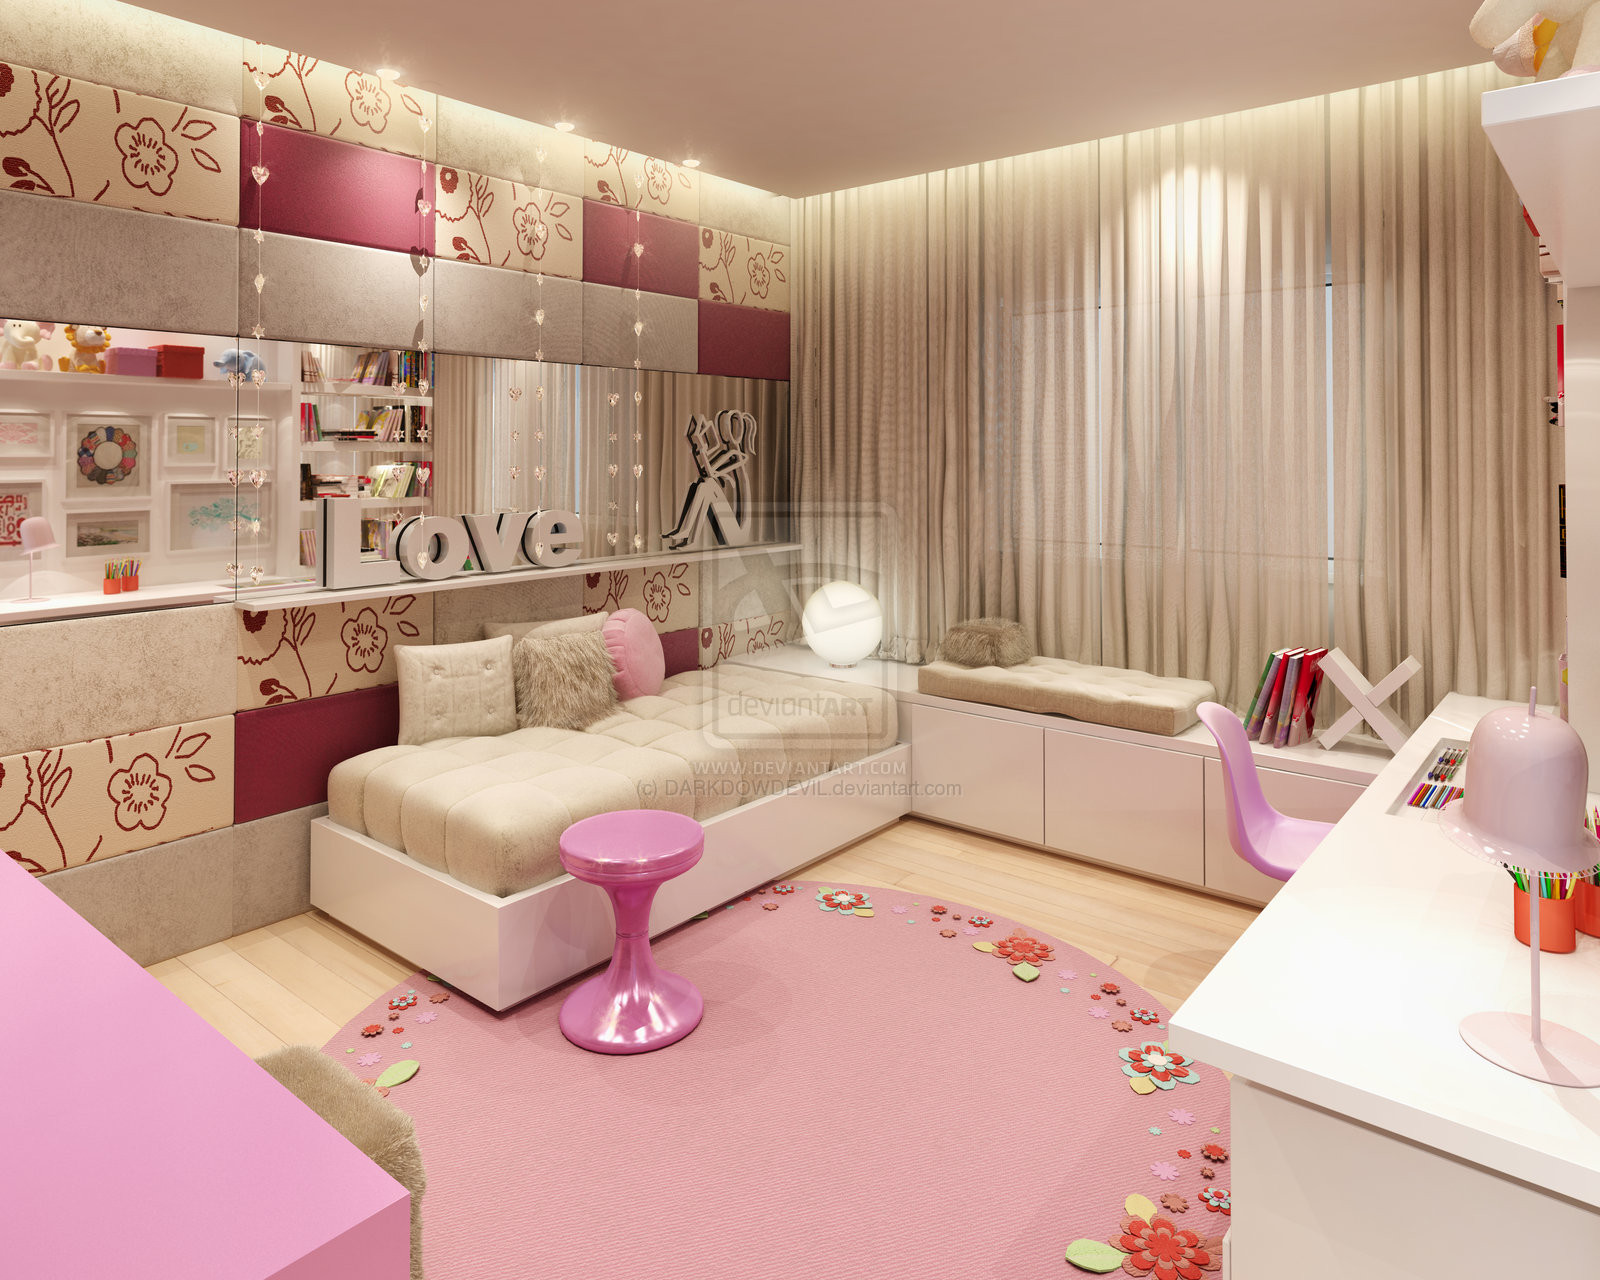 Girls Bedroom Design Ideas
 Girly Bedroom Design Ideas Wonderful